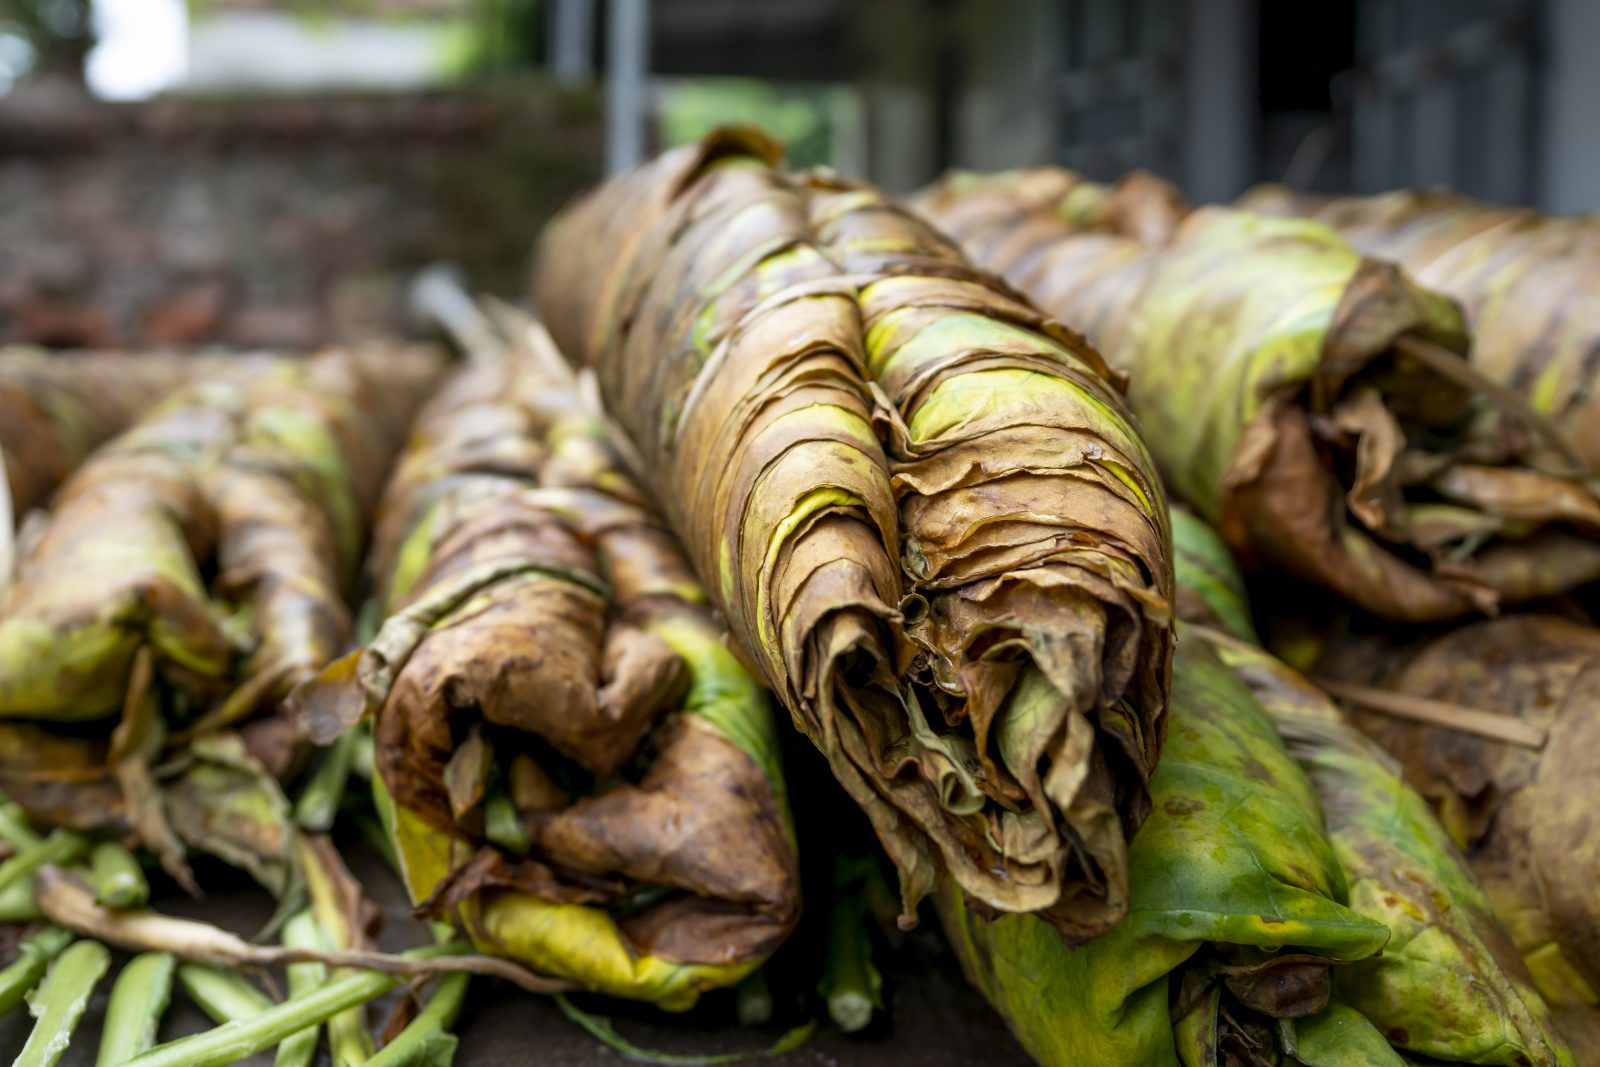 Ripe tobacco leaves heaped on market